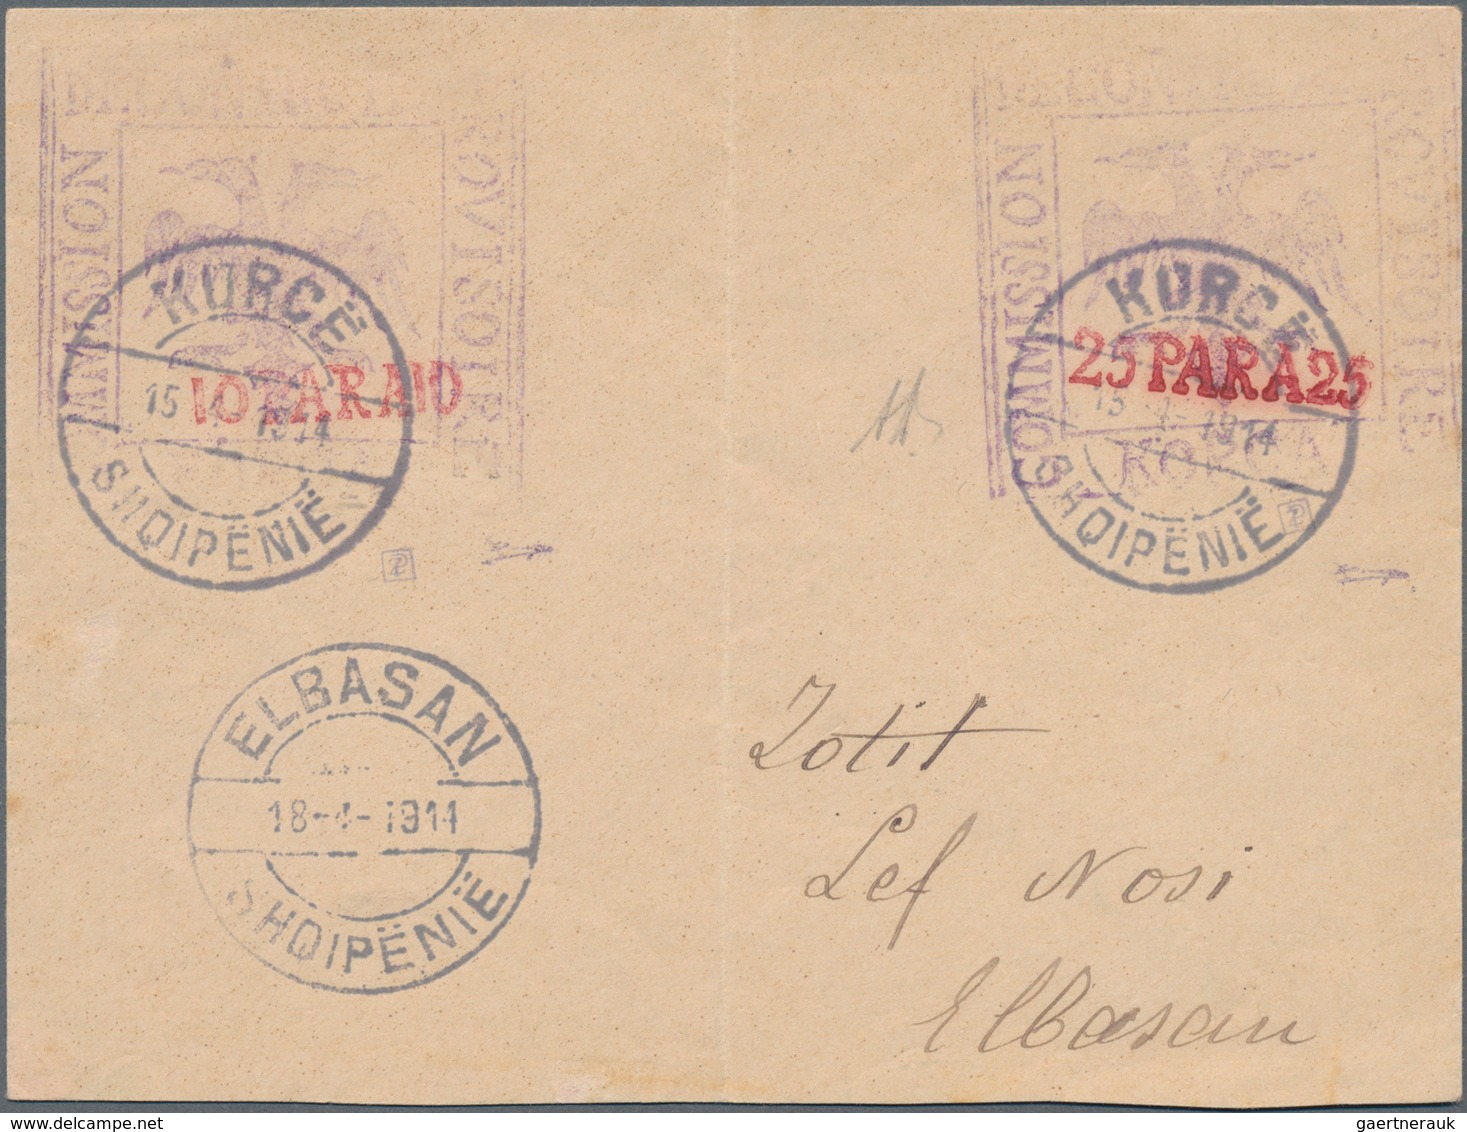 Albanien - Ganzsachen: KORCE, 1914, Stationery Envelope Bearing BOTH Imprints 10 Pa Red On Violet An - Albanien